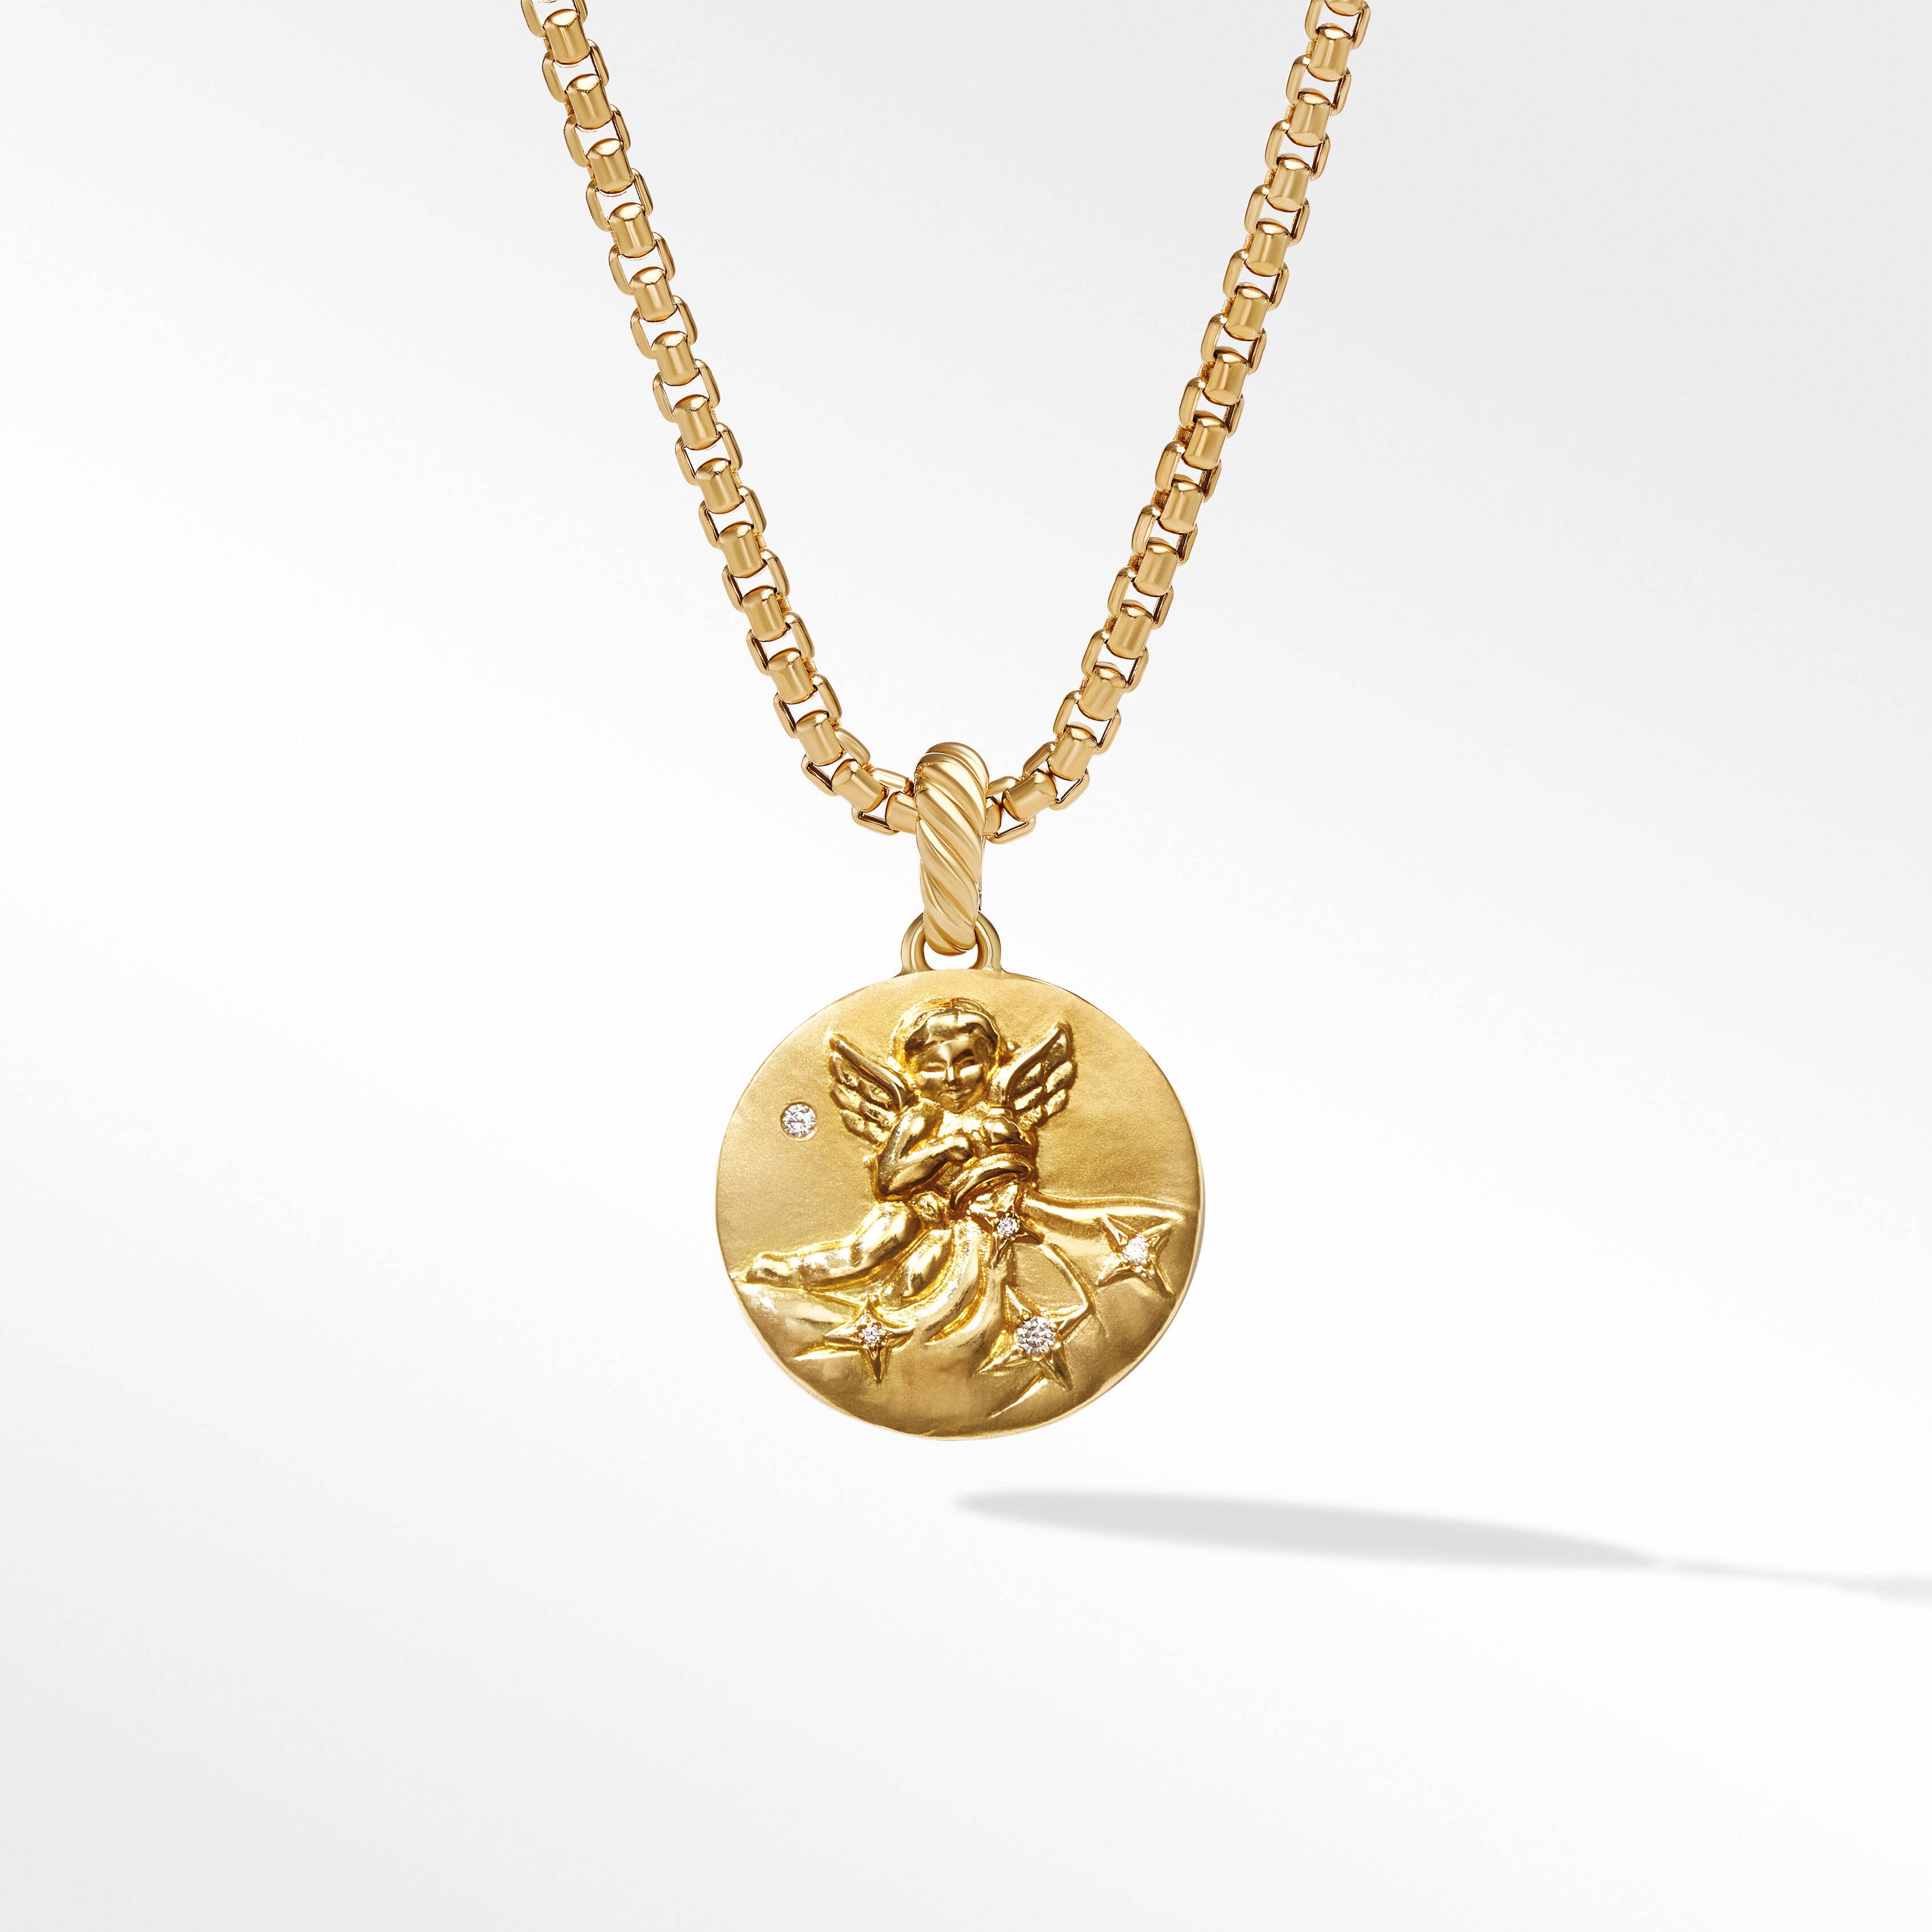 Aquarius Amulet in 18K Yellow Gold with Diamonds